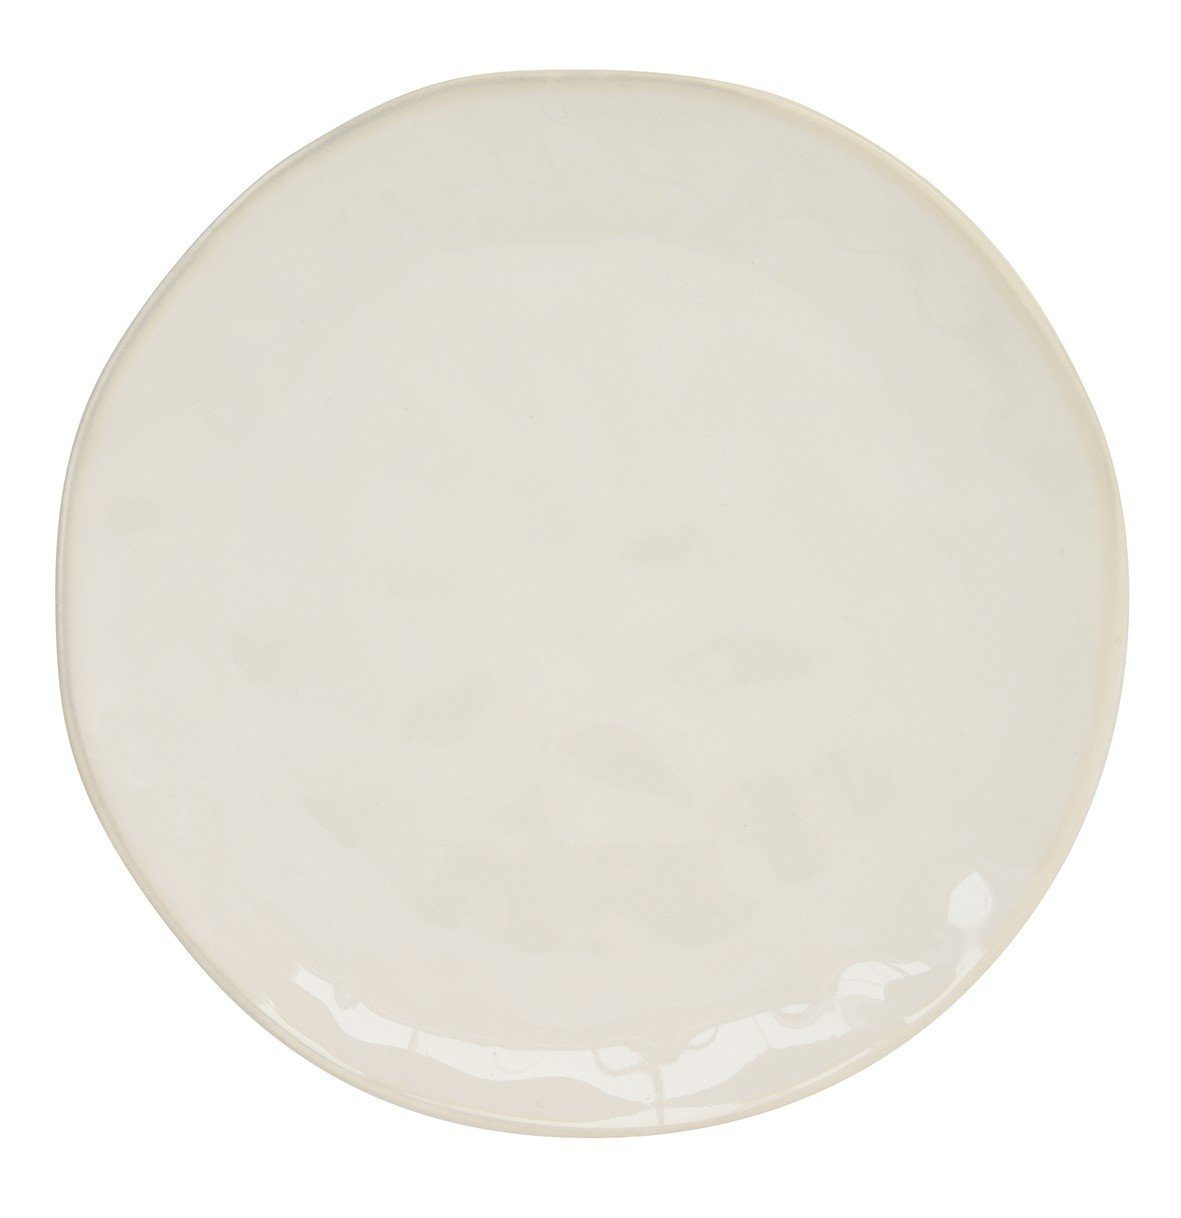 easylife H:2cm D:21cm Interiors, Dessertteller Porzellan Weiß